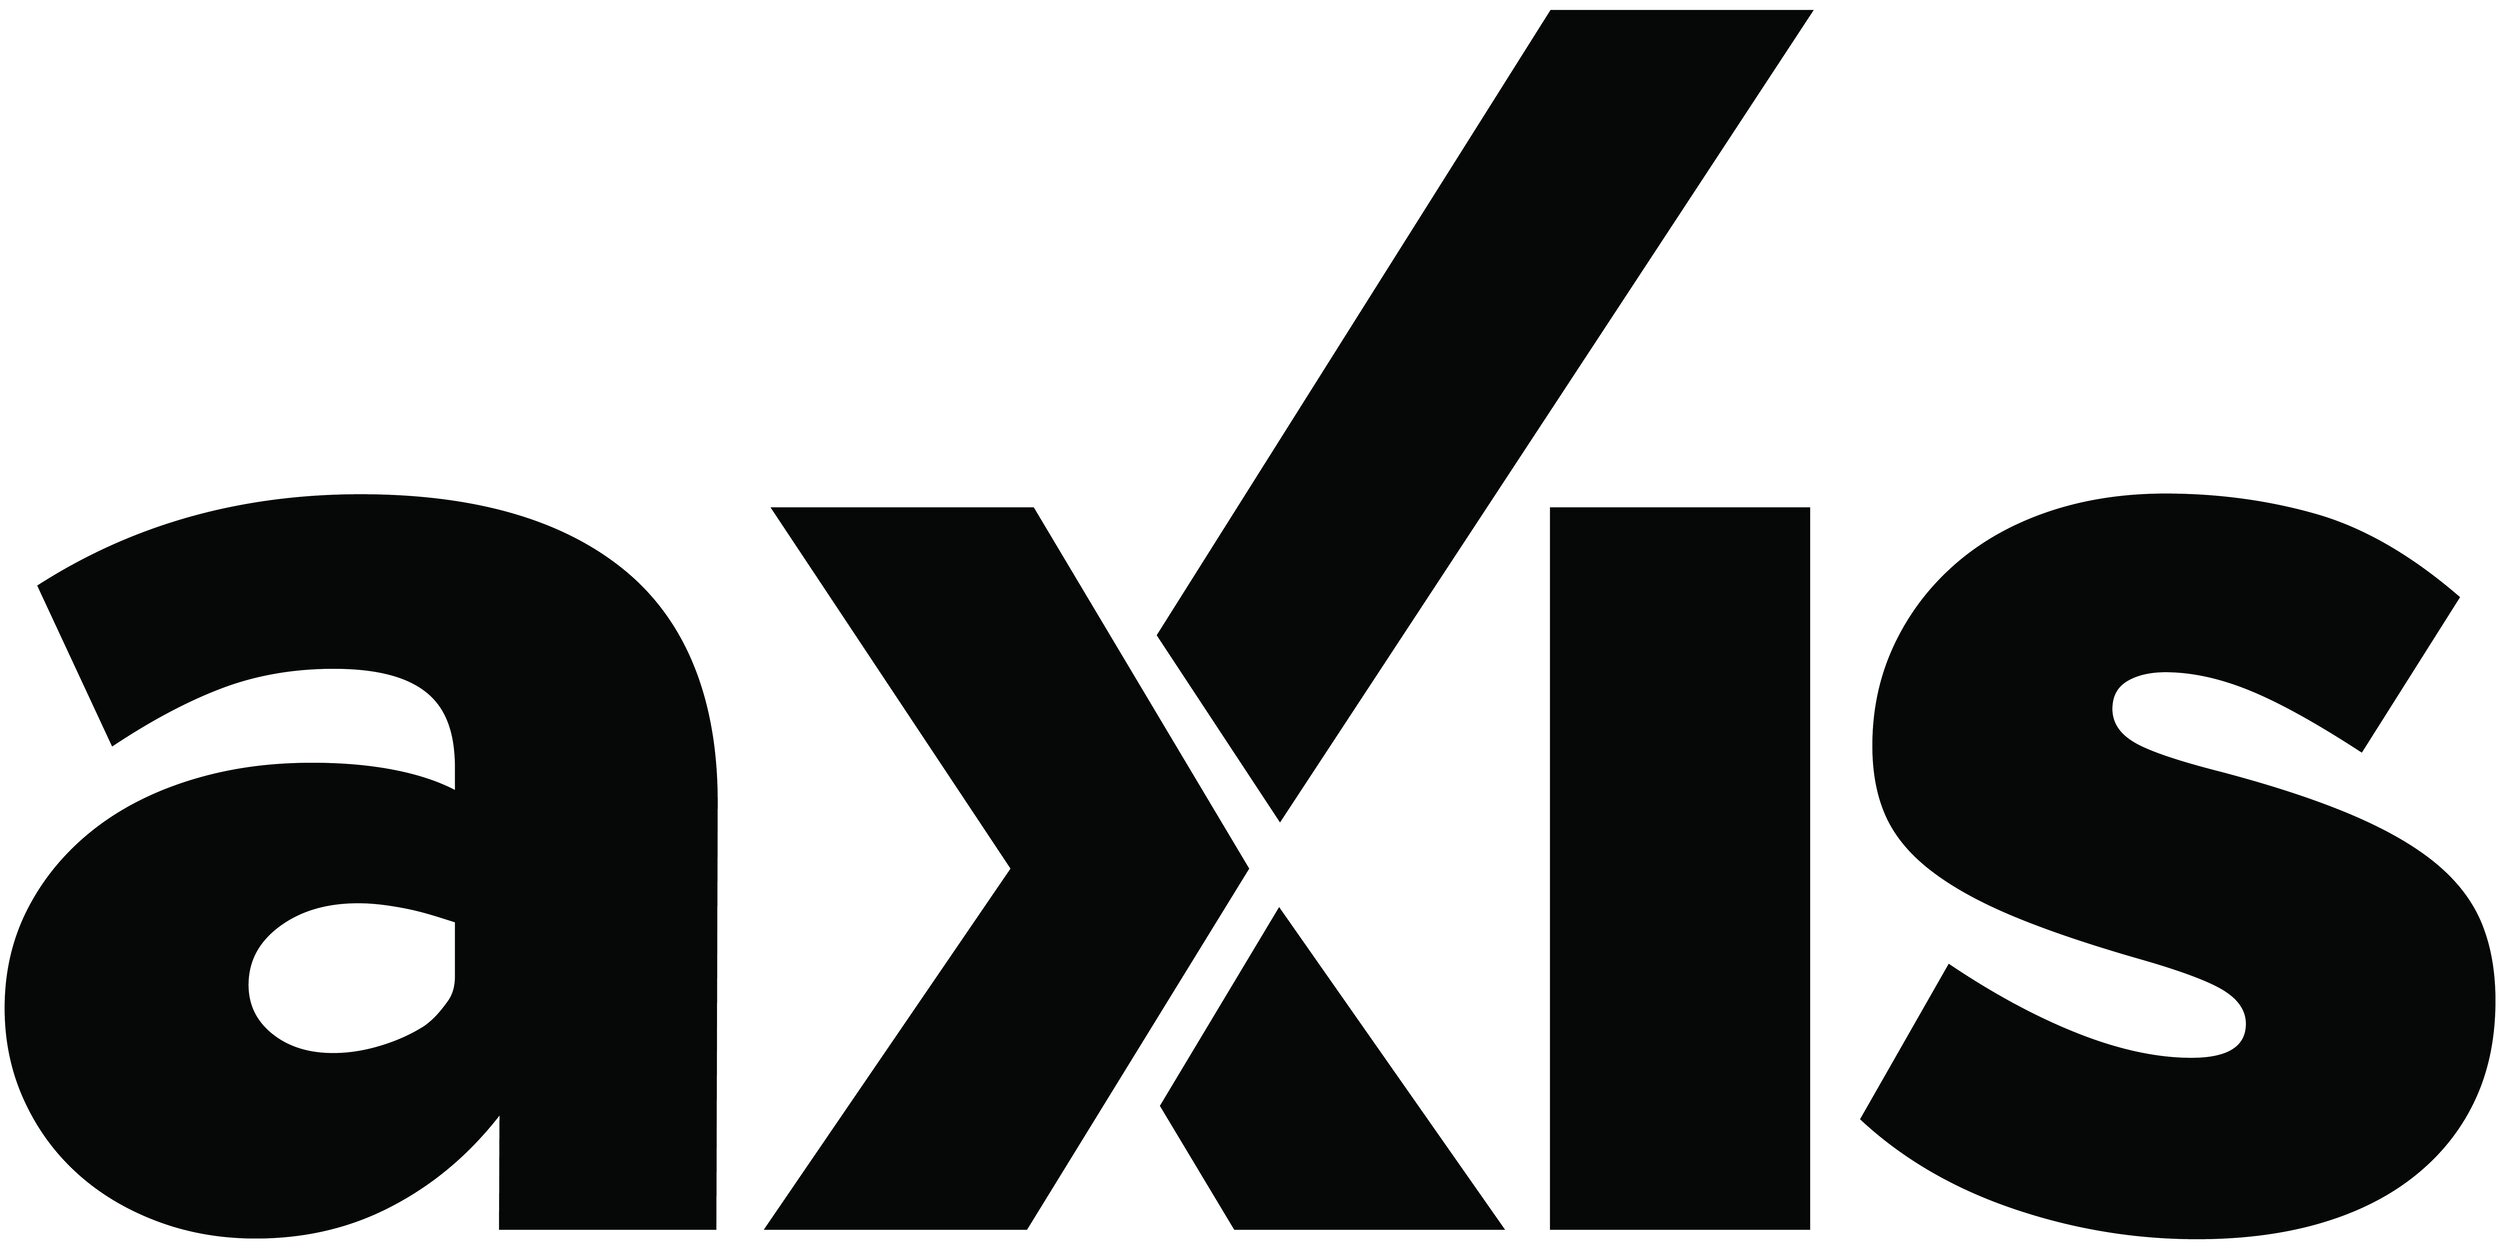 Axis_Logo_Black 01.jpg